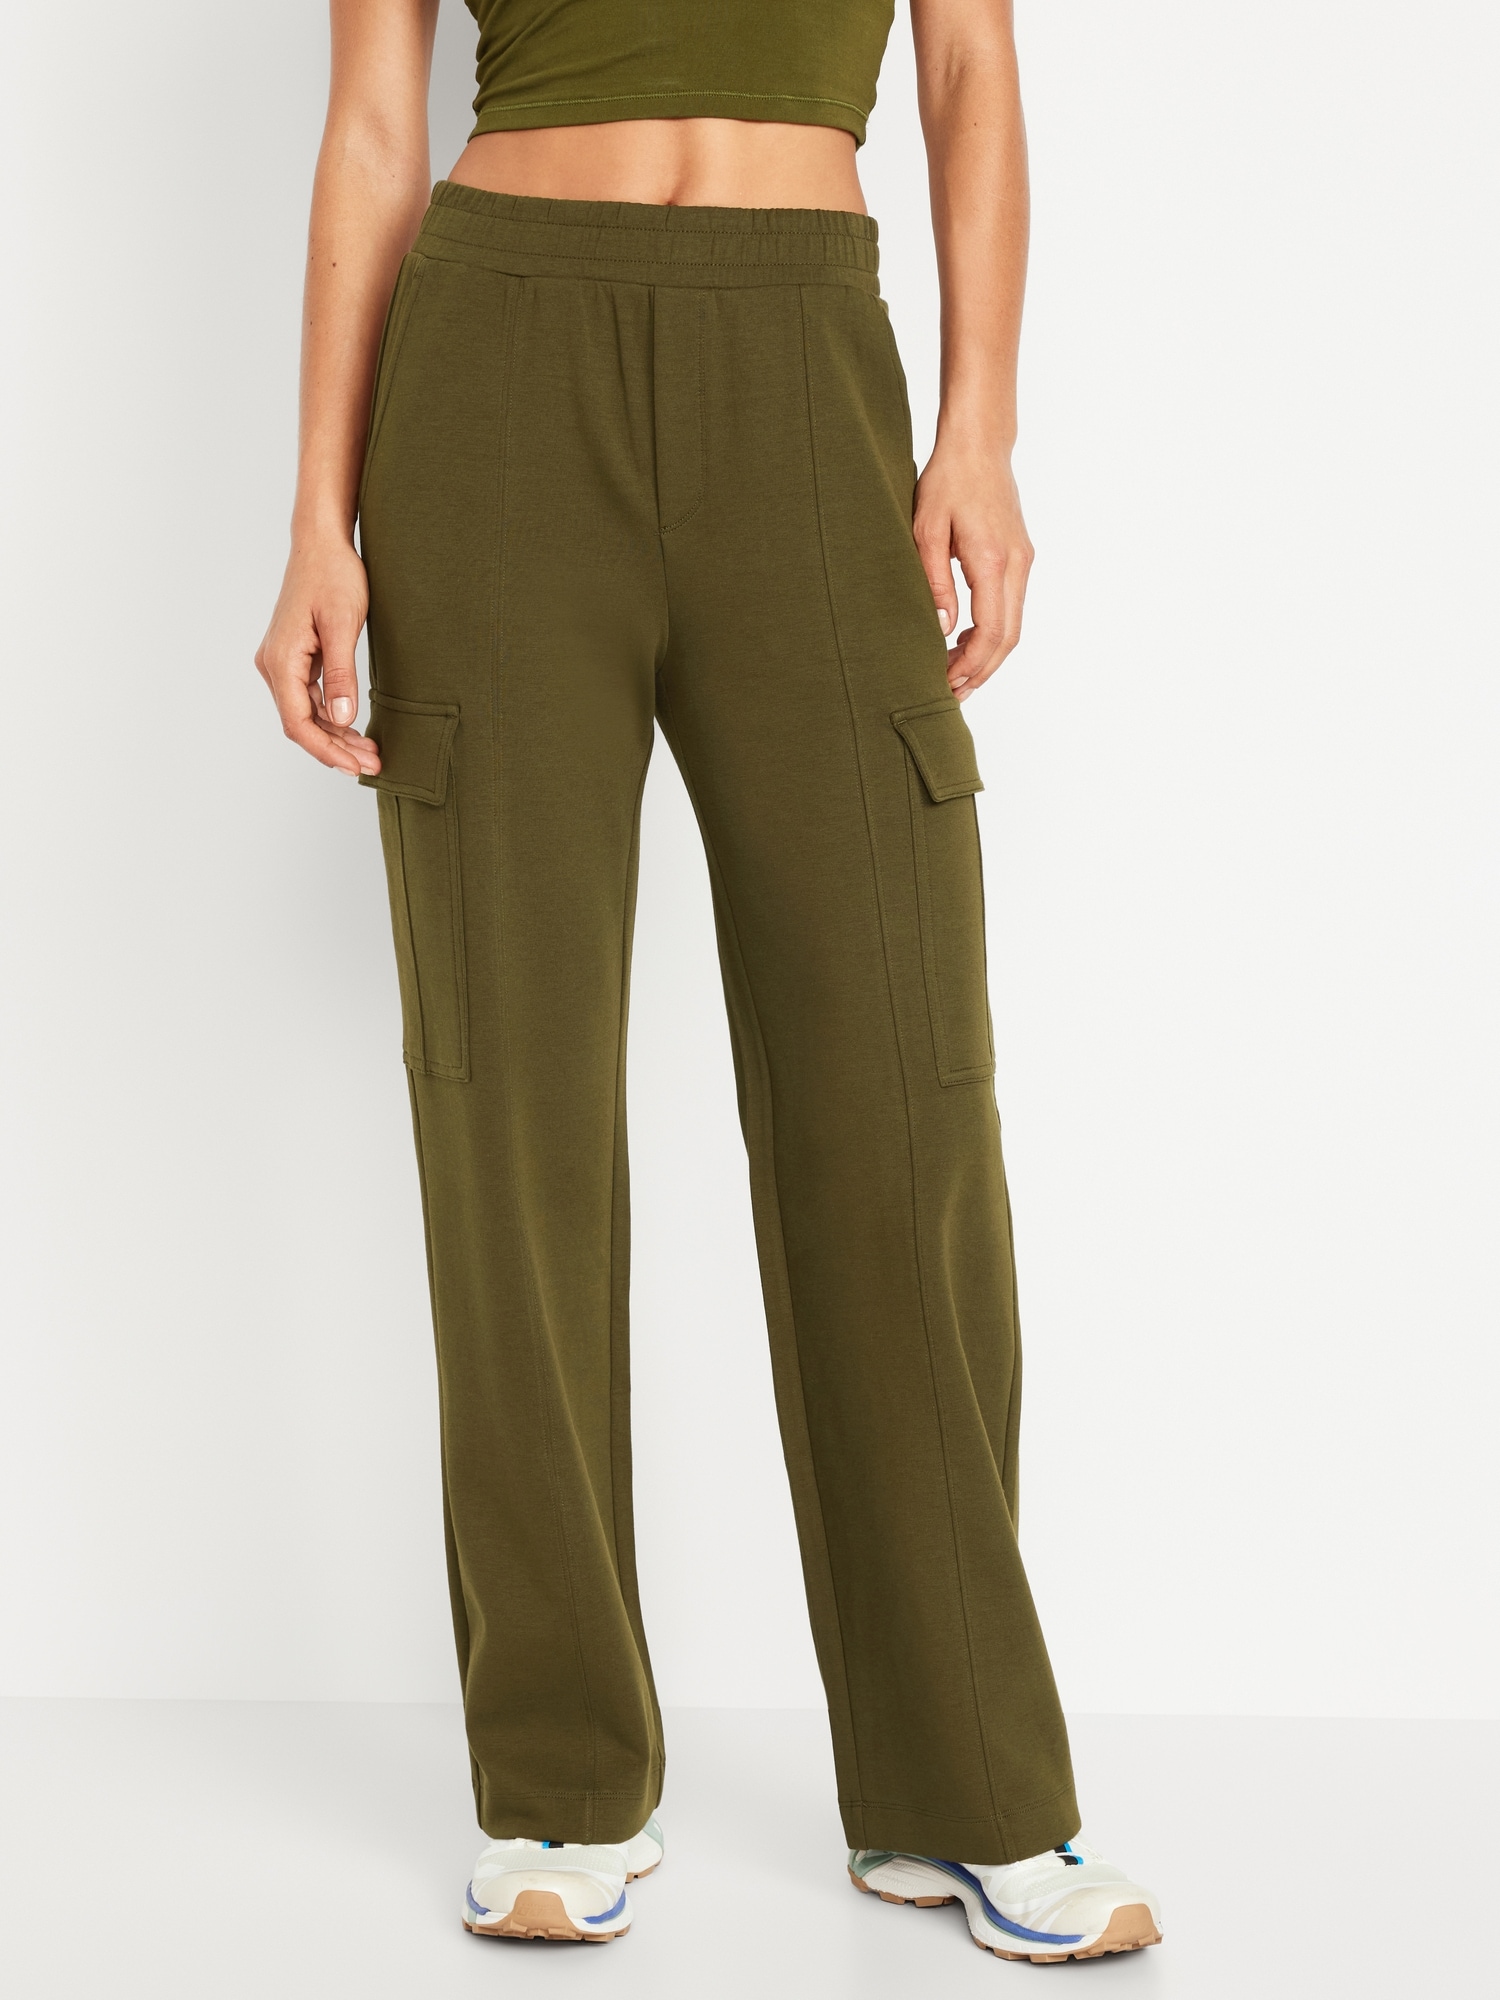 Ladies Cargo Trousers Skinny Stretch Women's Jeans Green khaki 6 8